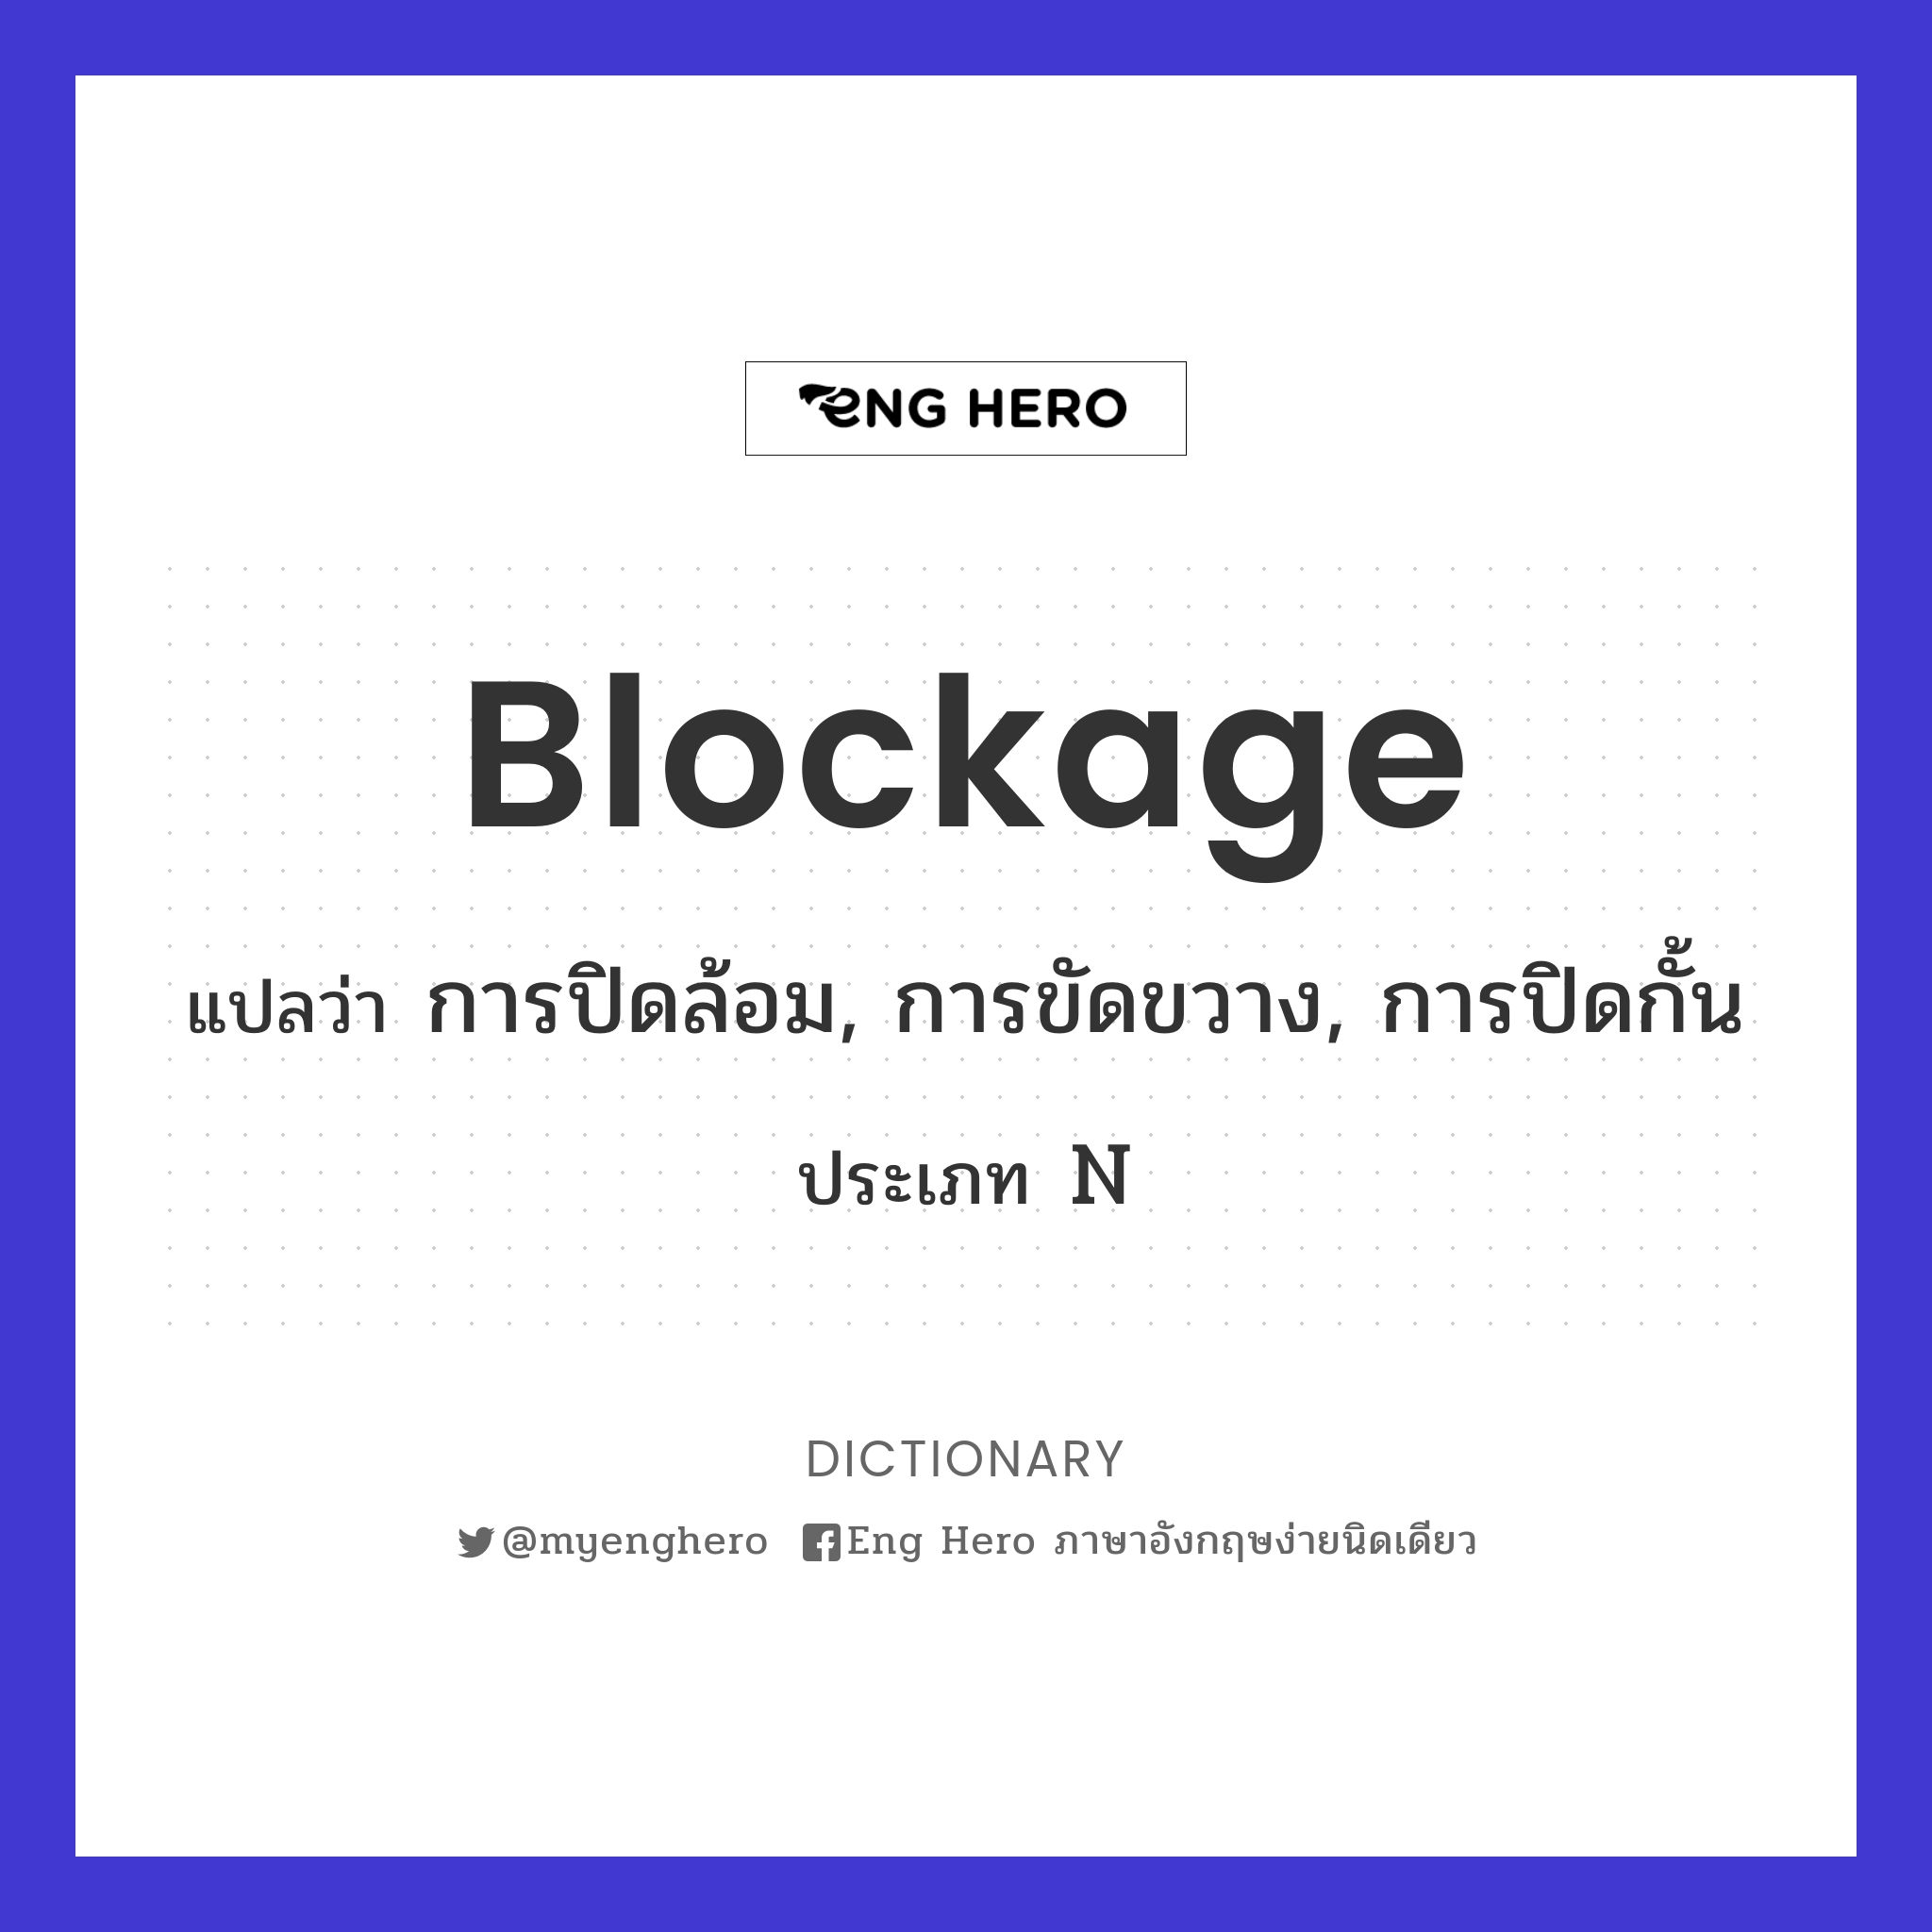 blockage